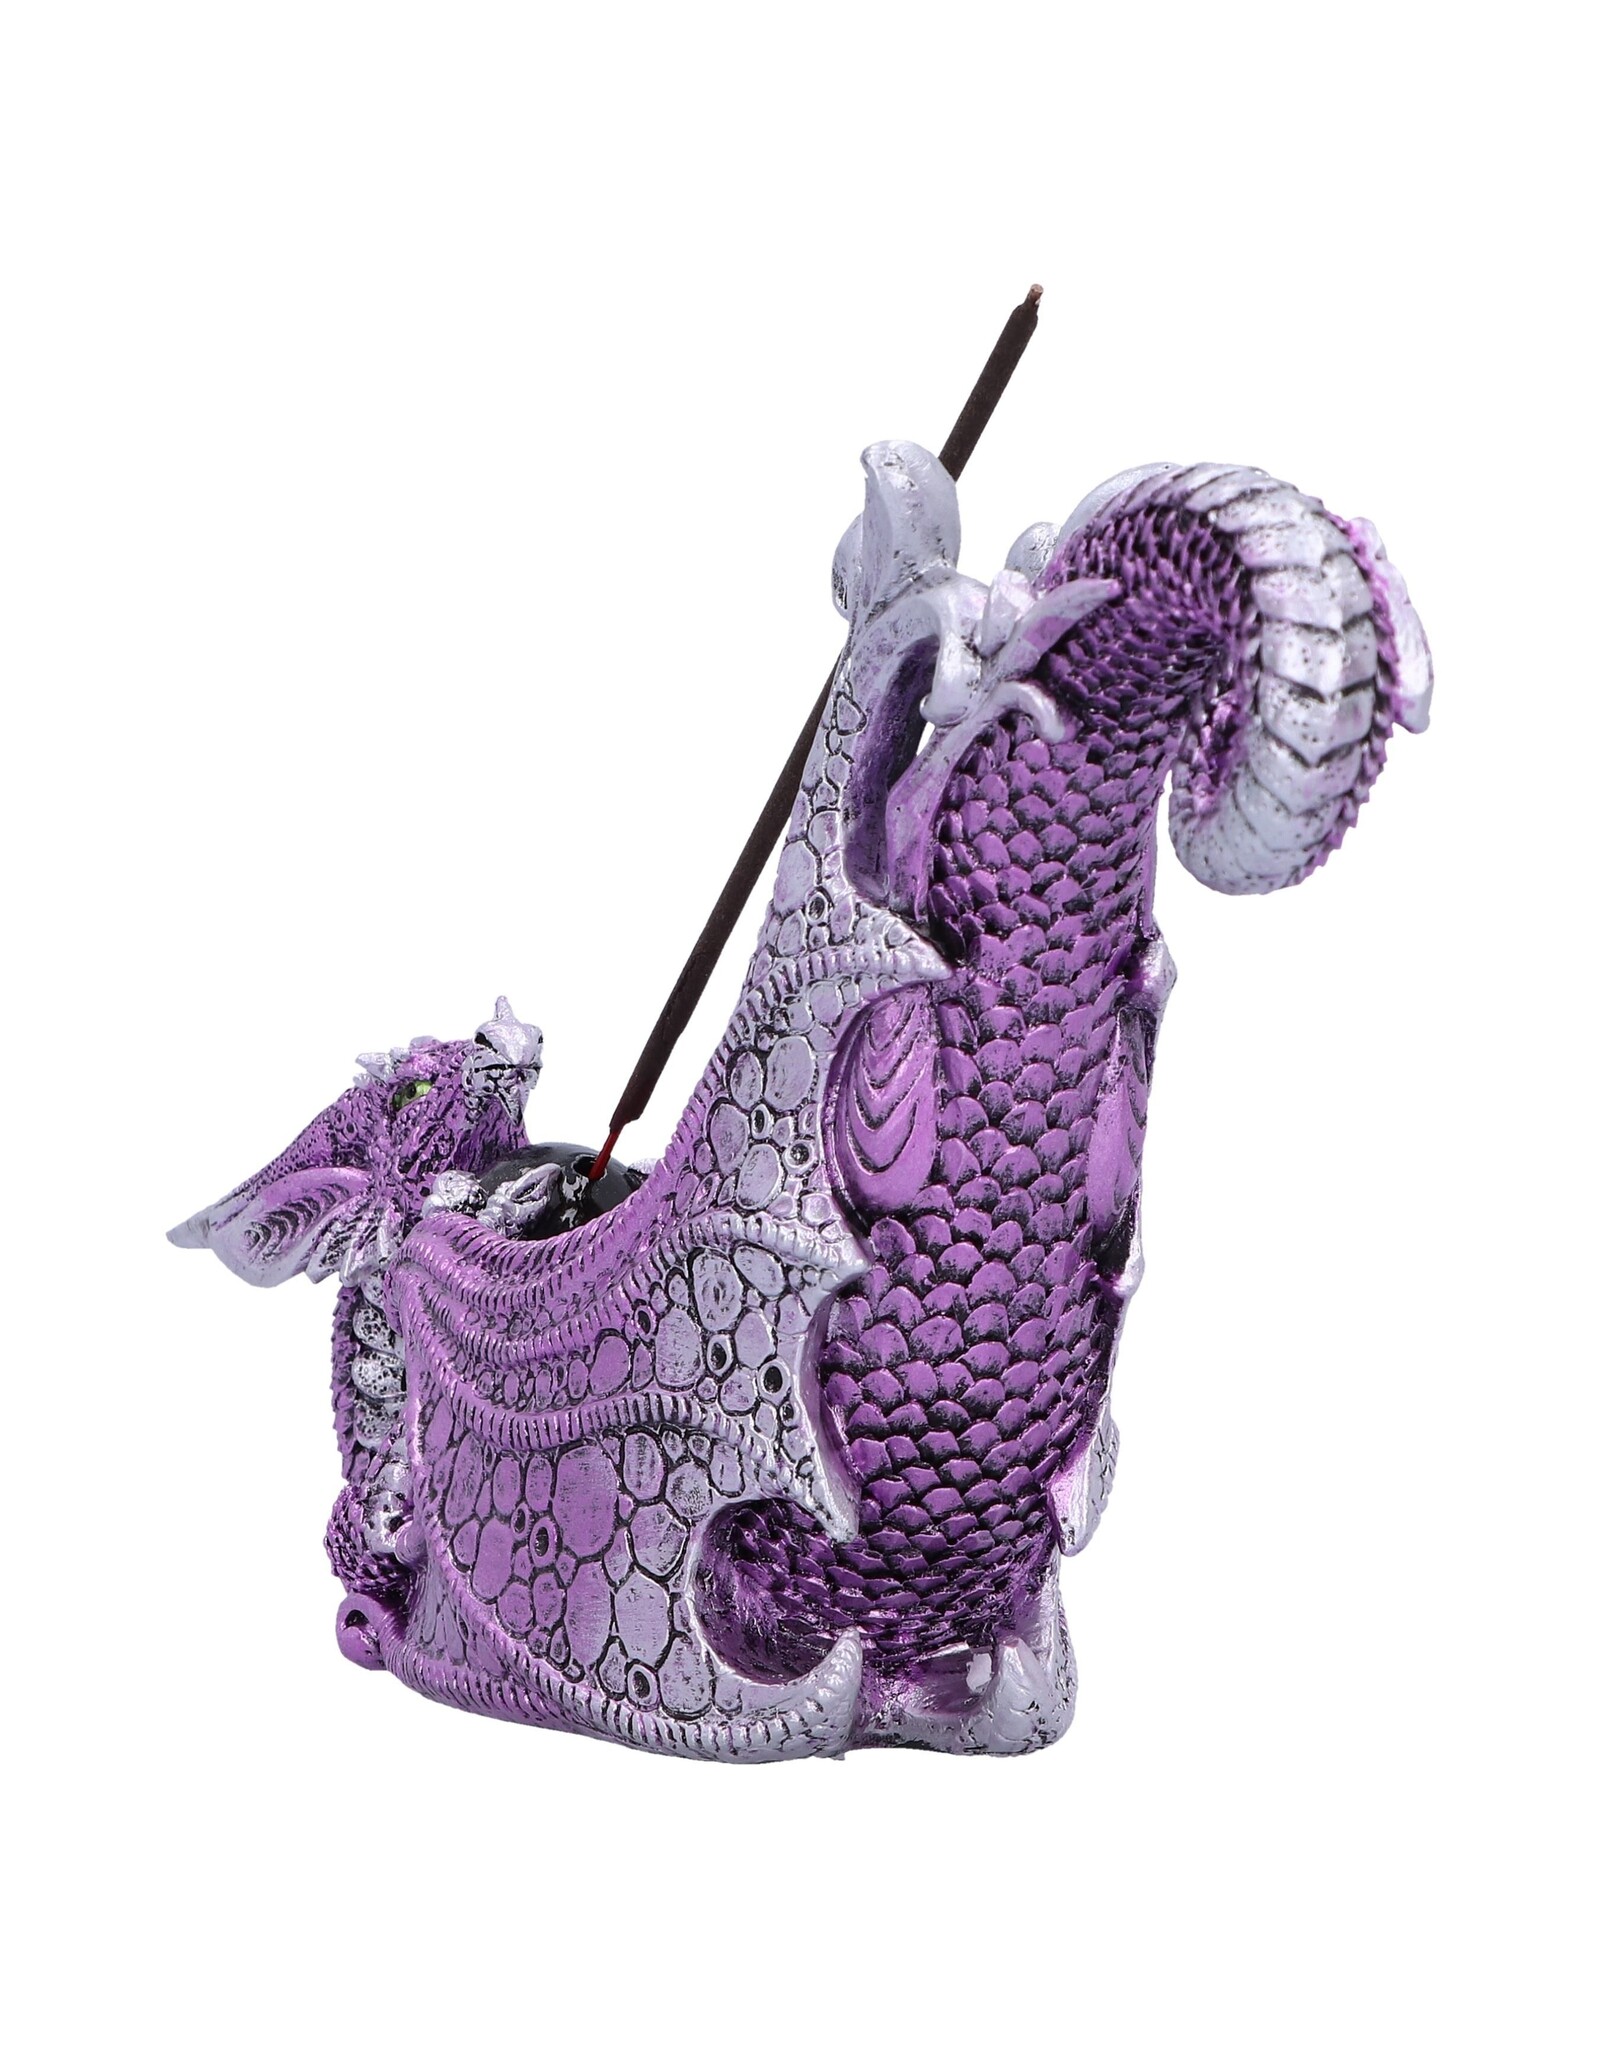 NemesisNow Giftware Figurines Collectables - Draconic Essence Incense Dragon Burner 26cm